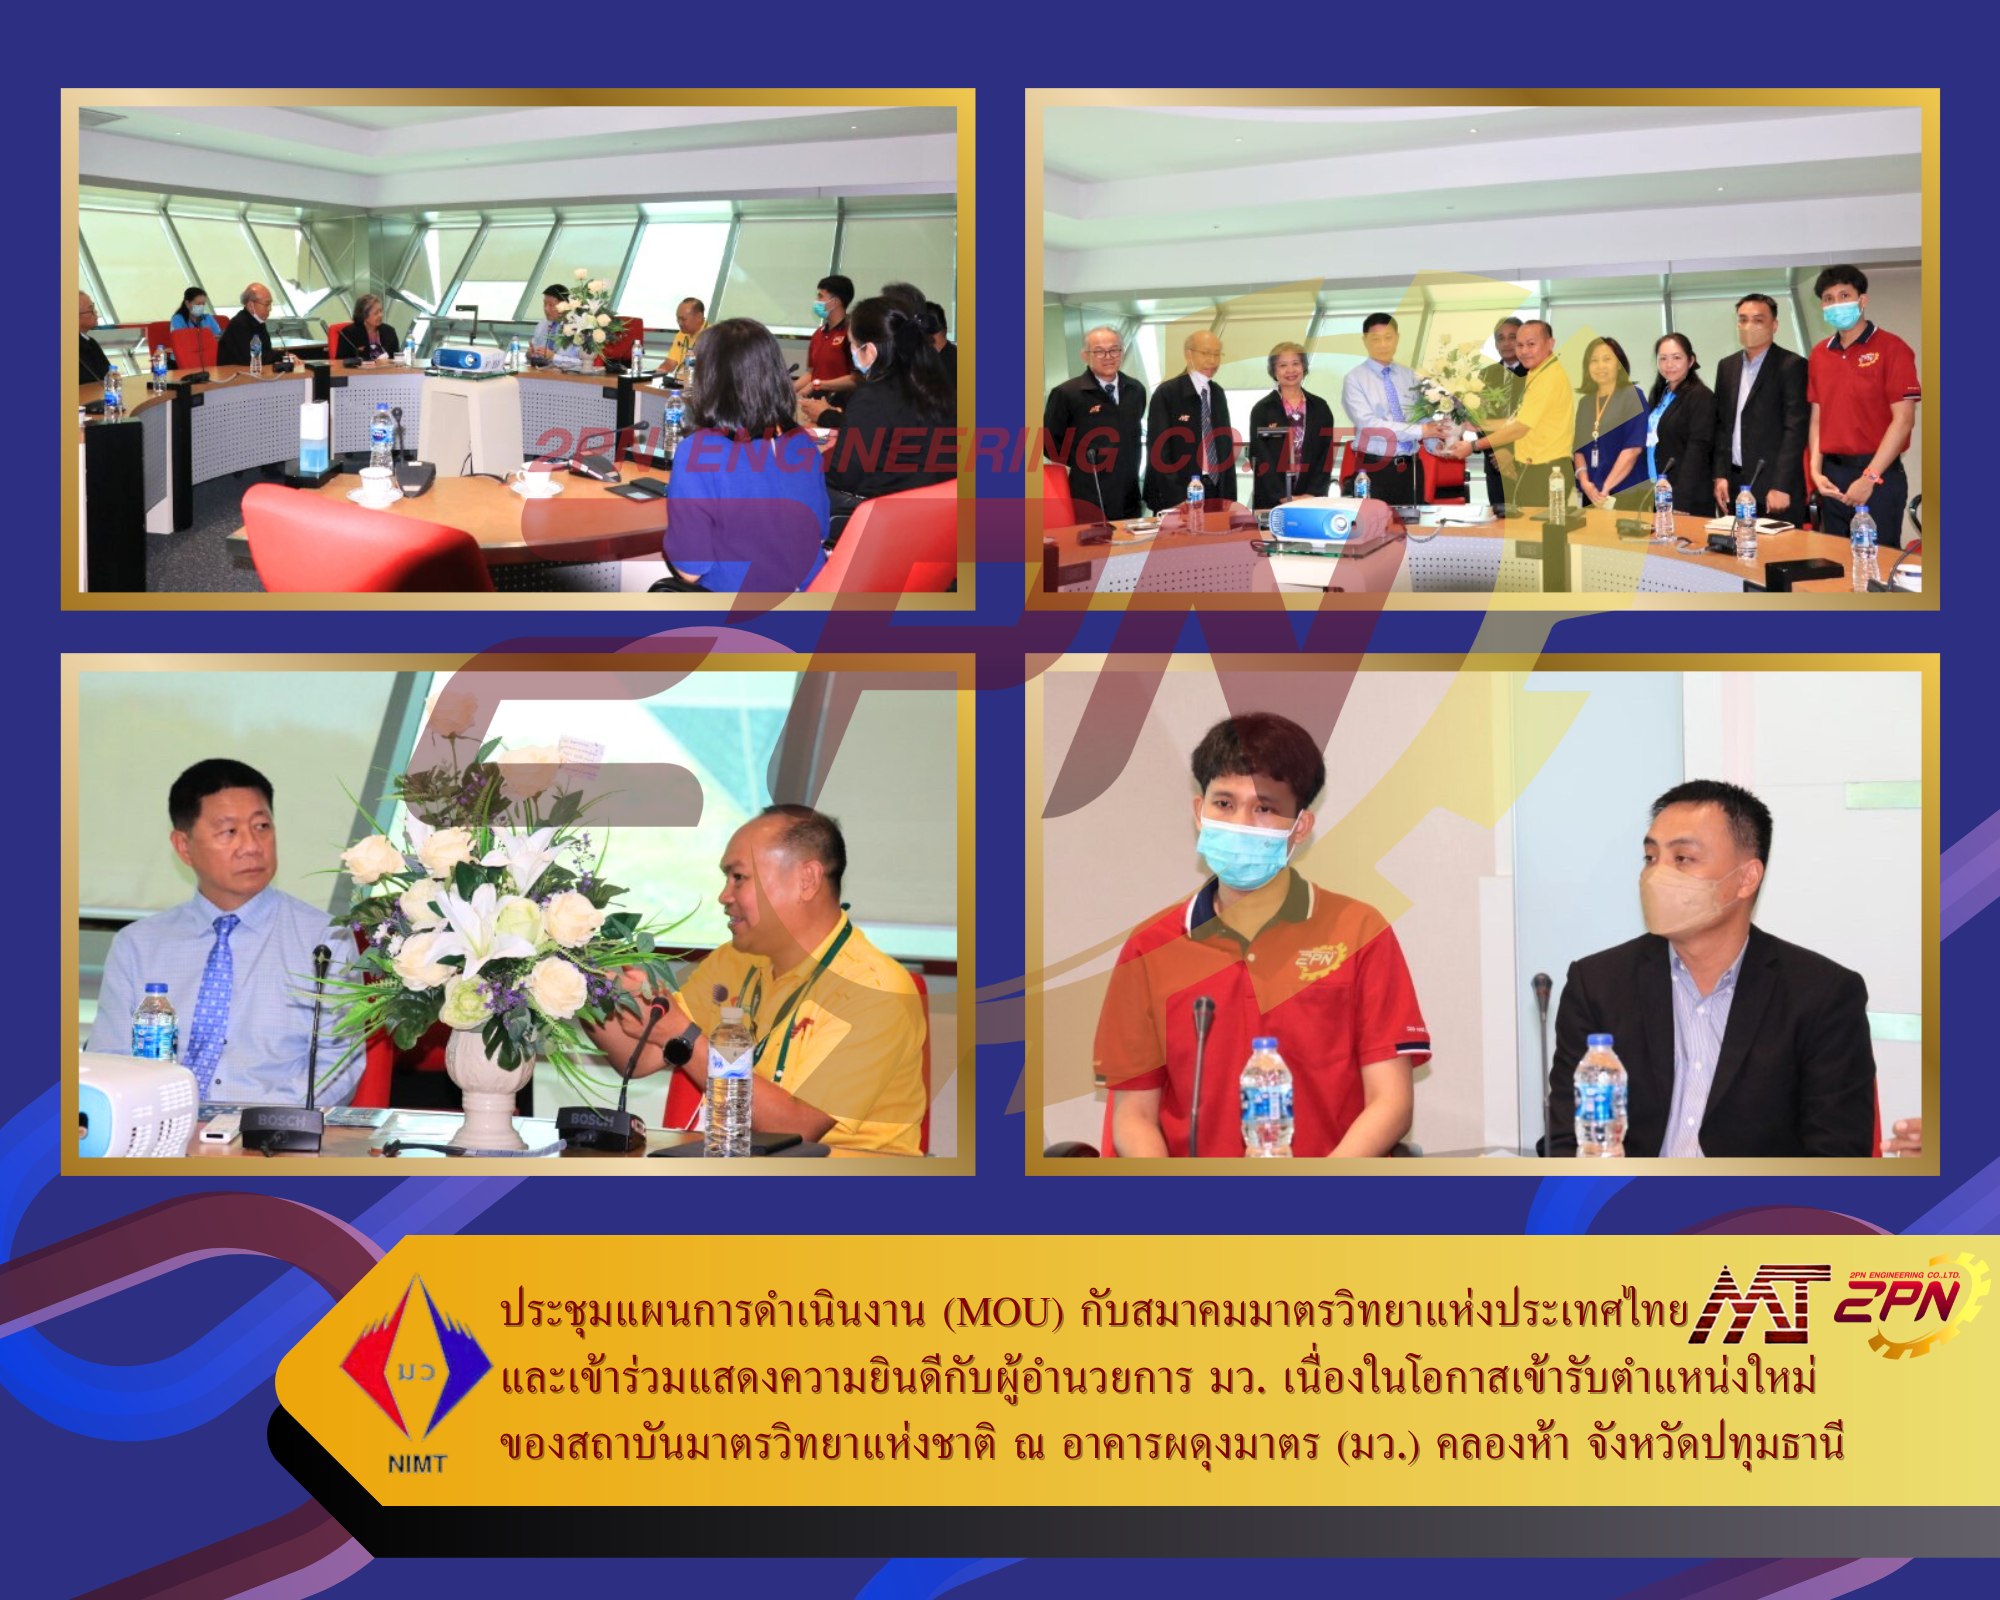 (MOU) ระหว่าง บริษัท ทูพีเอ็น เอ็นจิเนียริ่ง จำกัด กับ สมาคมมาตรวิทยาแห่งประเทศไทย